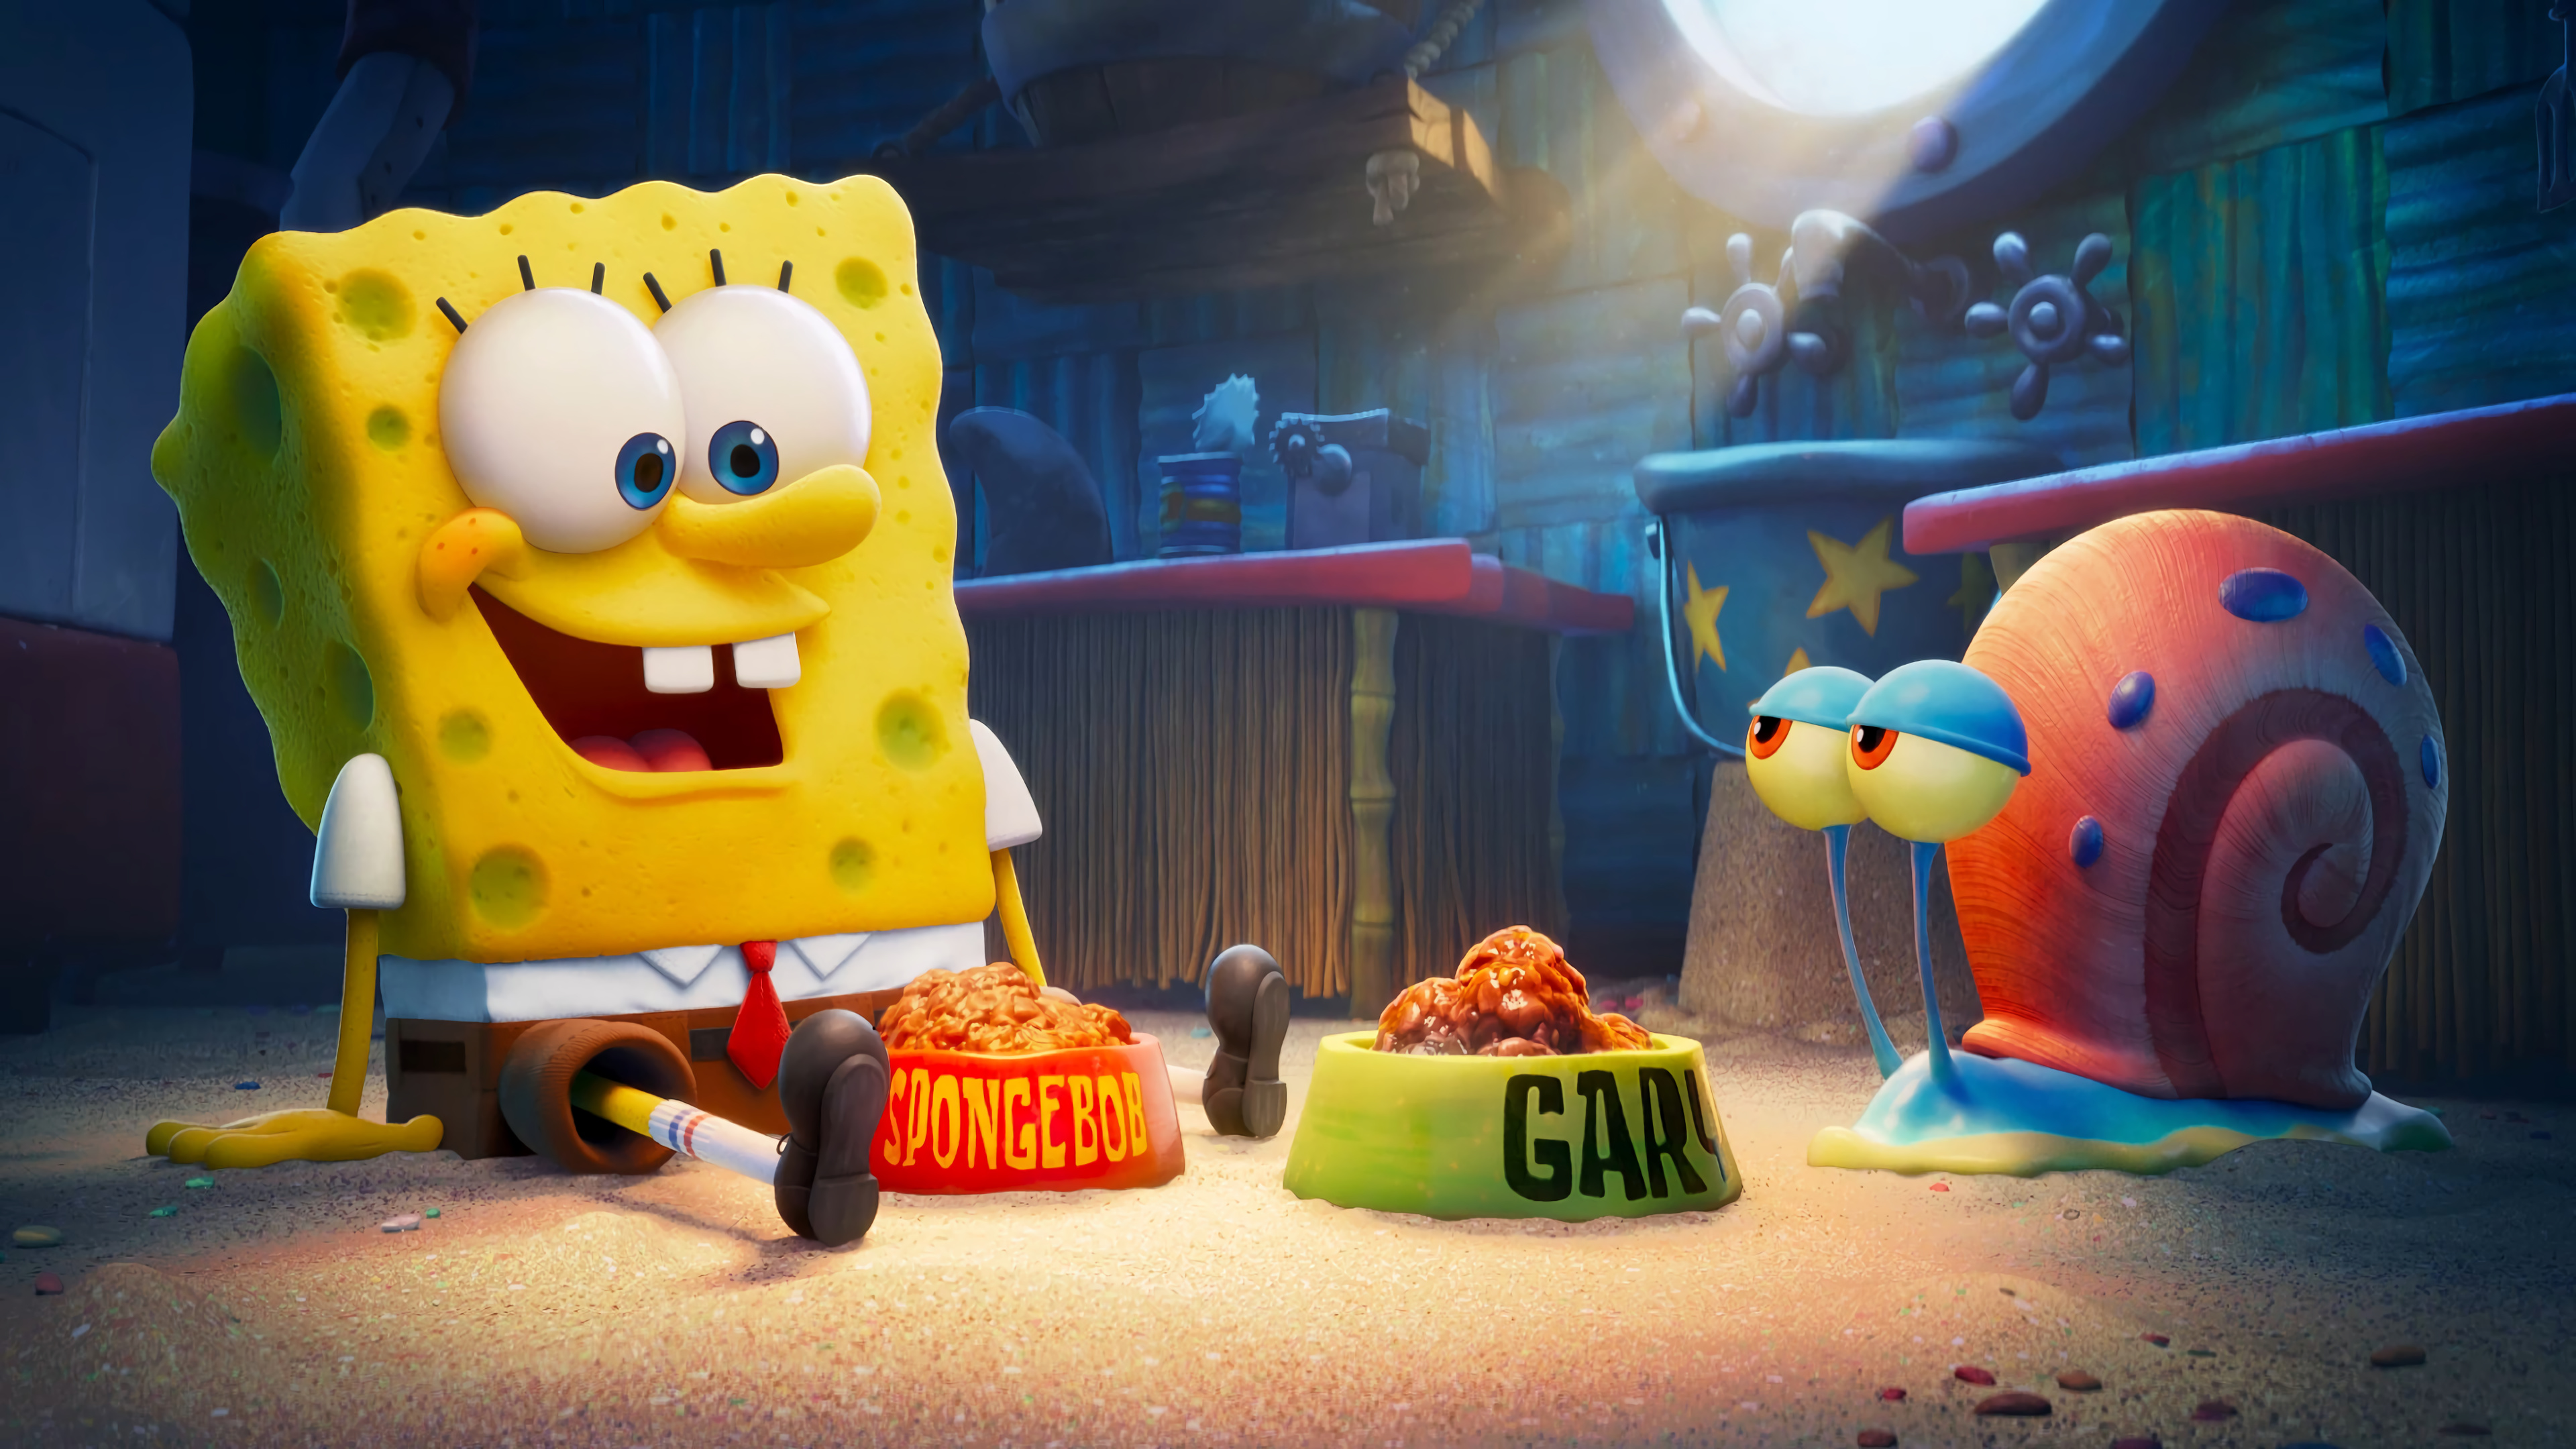 General 3840x2160 The SpongeBob Movie: Sponge on the Run Spongebob film stills CGI cartoon